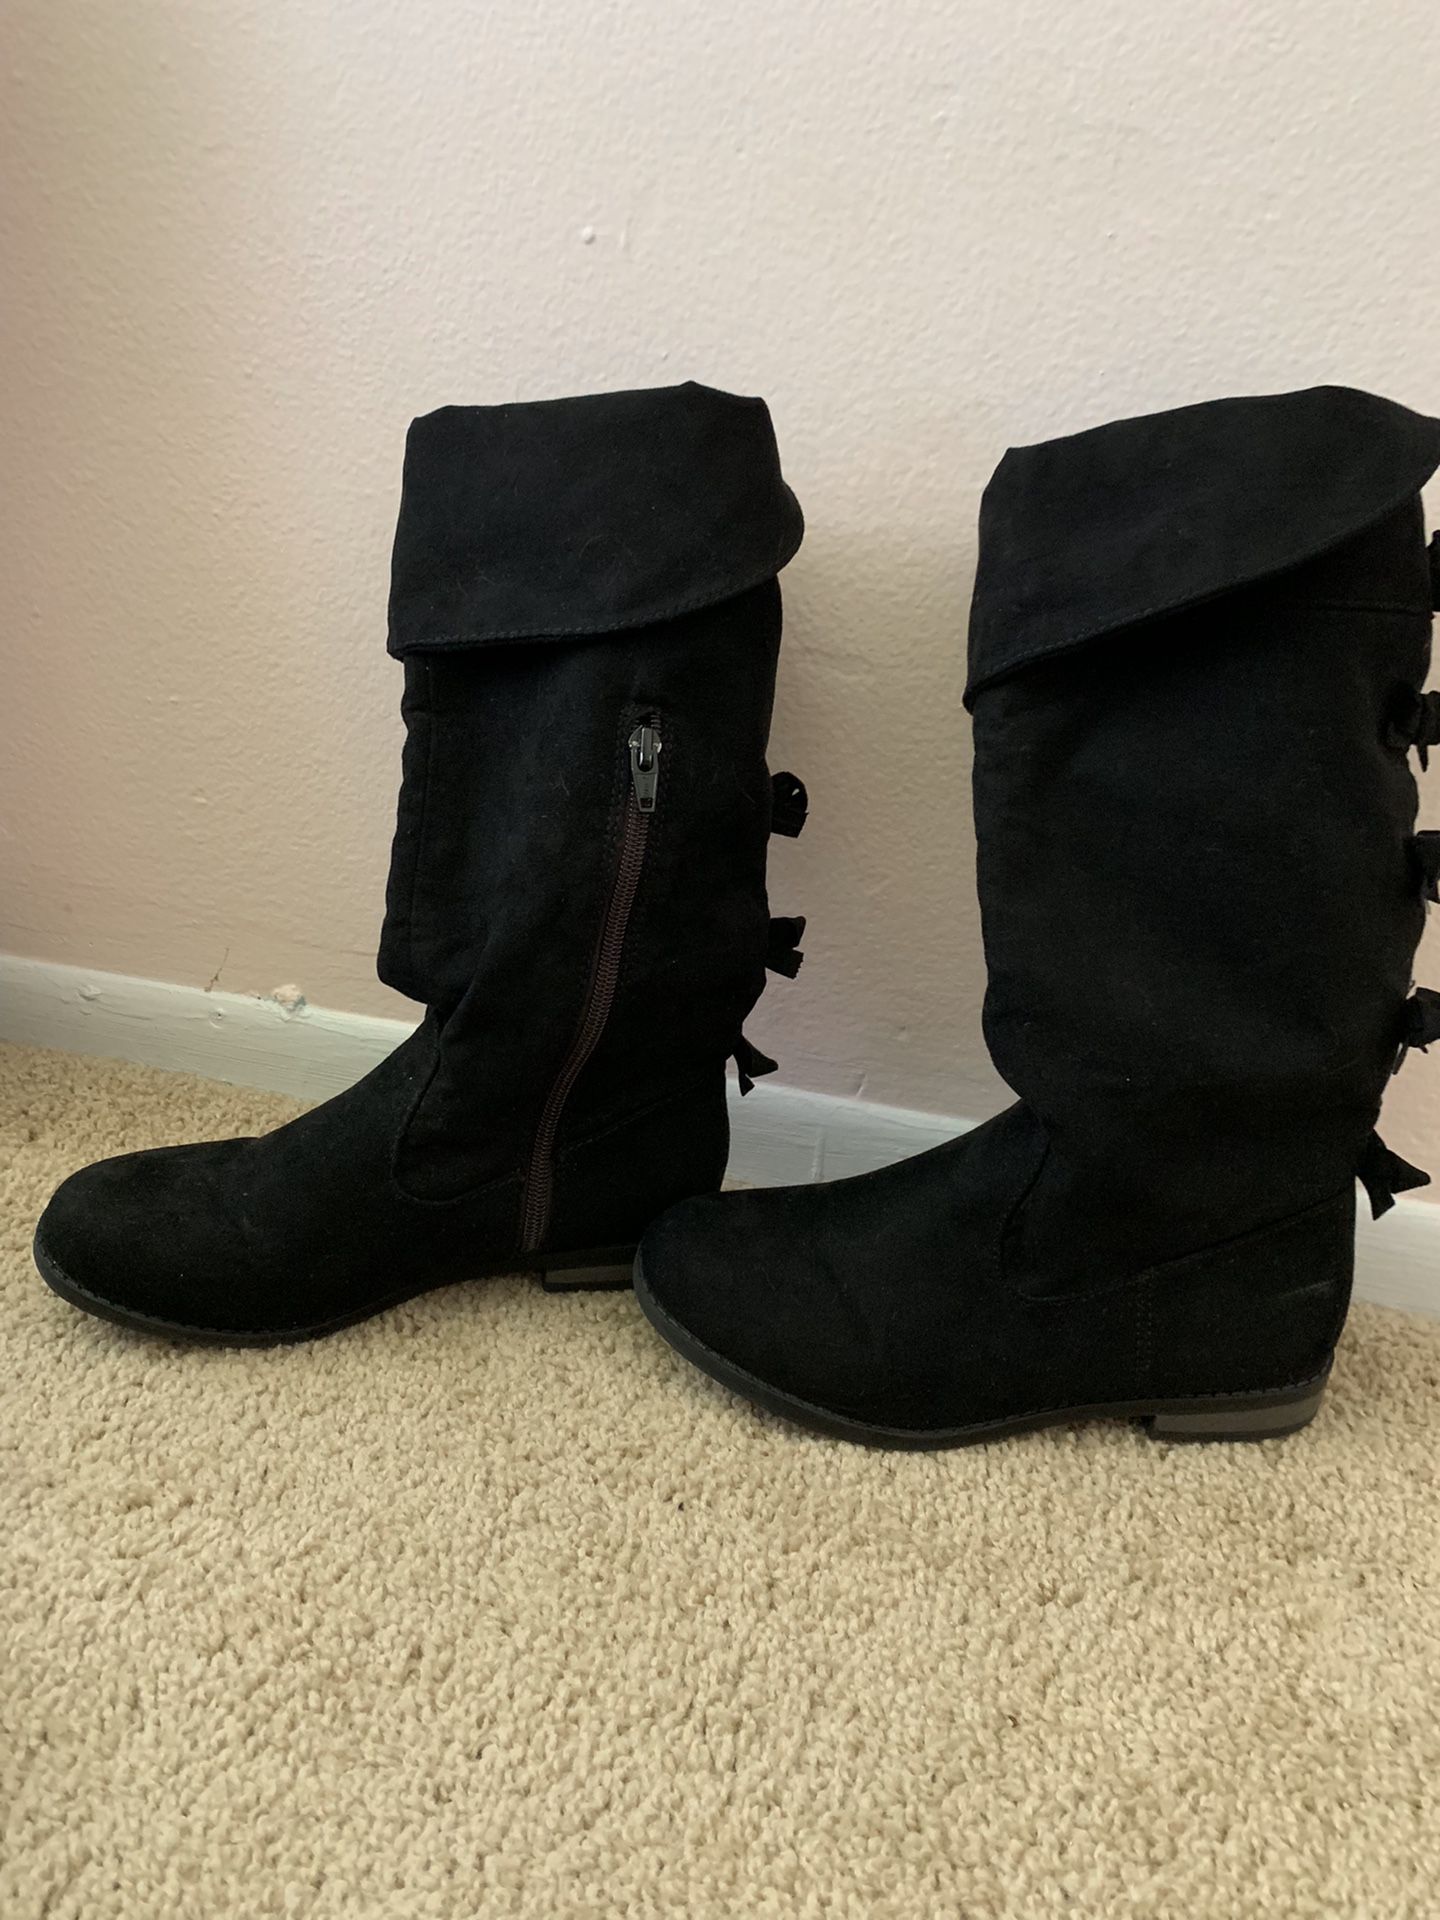 Girls size 4 black boots Cat & Jack like new